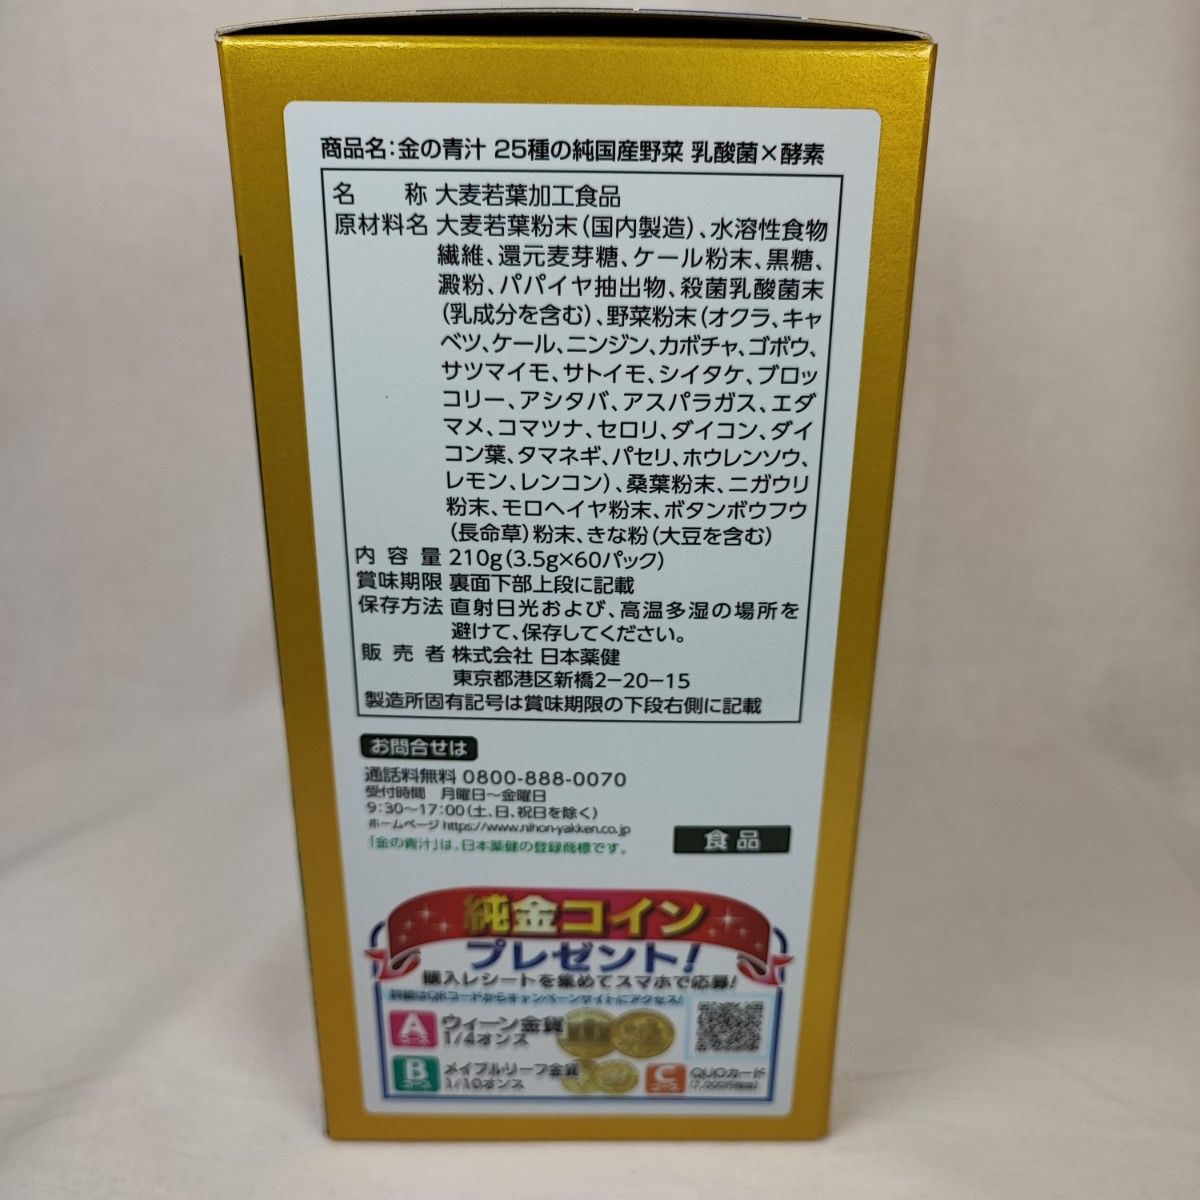 新品 日本薬健 金の青汁 25種の純国産野菜 乳酸菌×酵素 3.5g×60